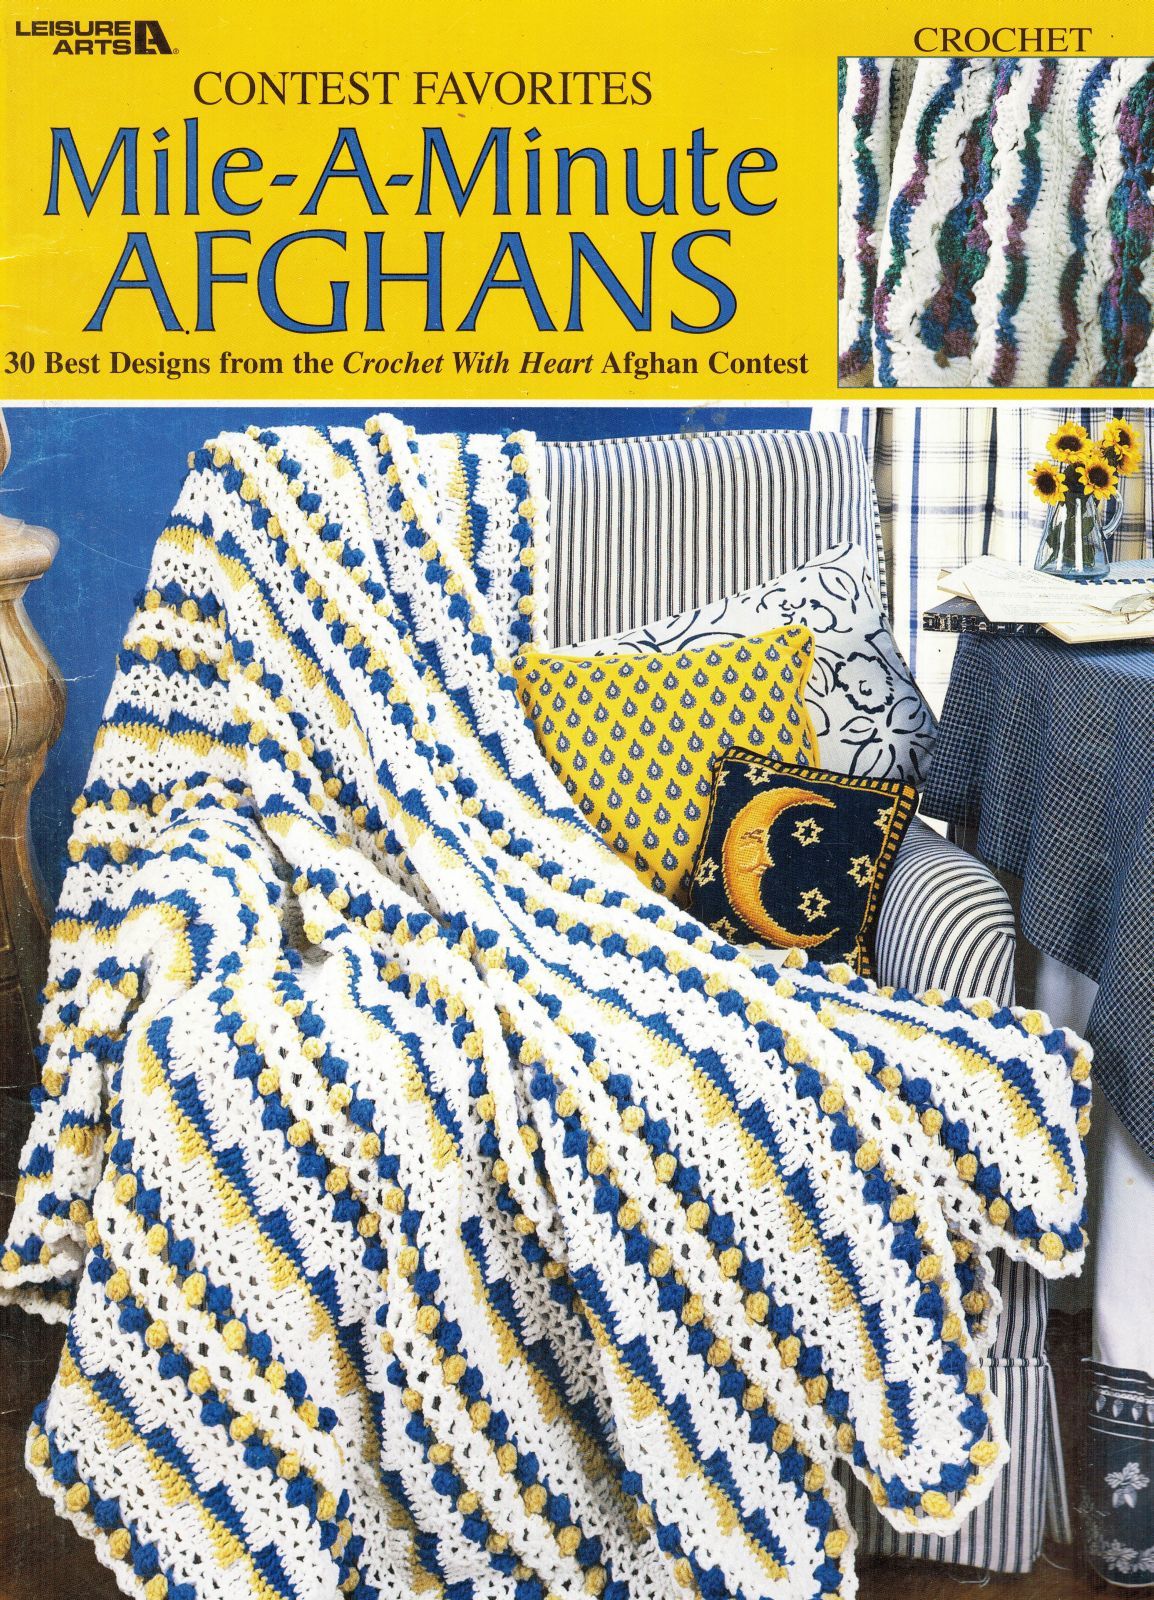 30 Best Designs Contest Favorites Mile-A-Minute Afghans Crochet Patterns  - $18.99